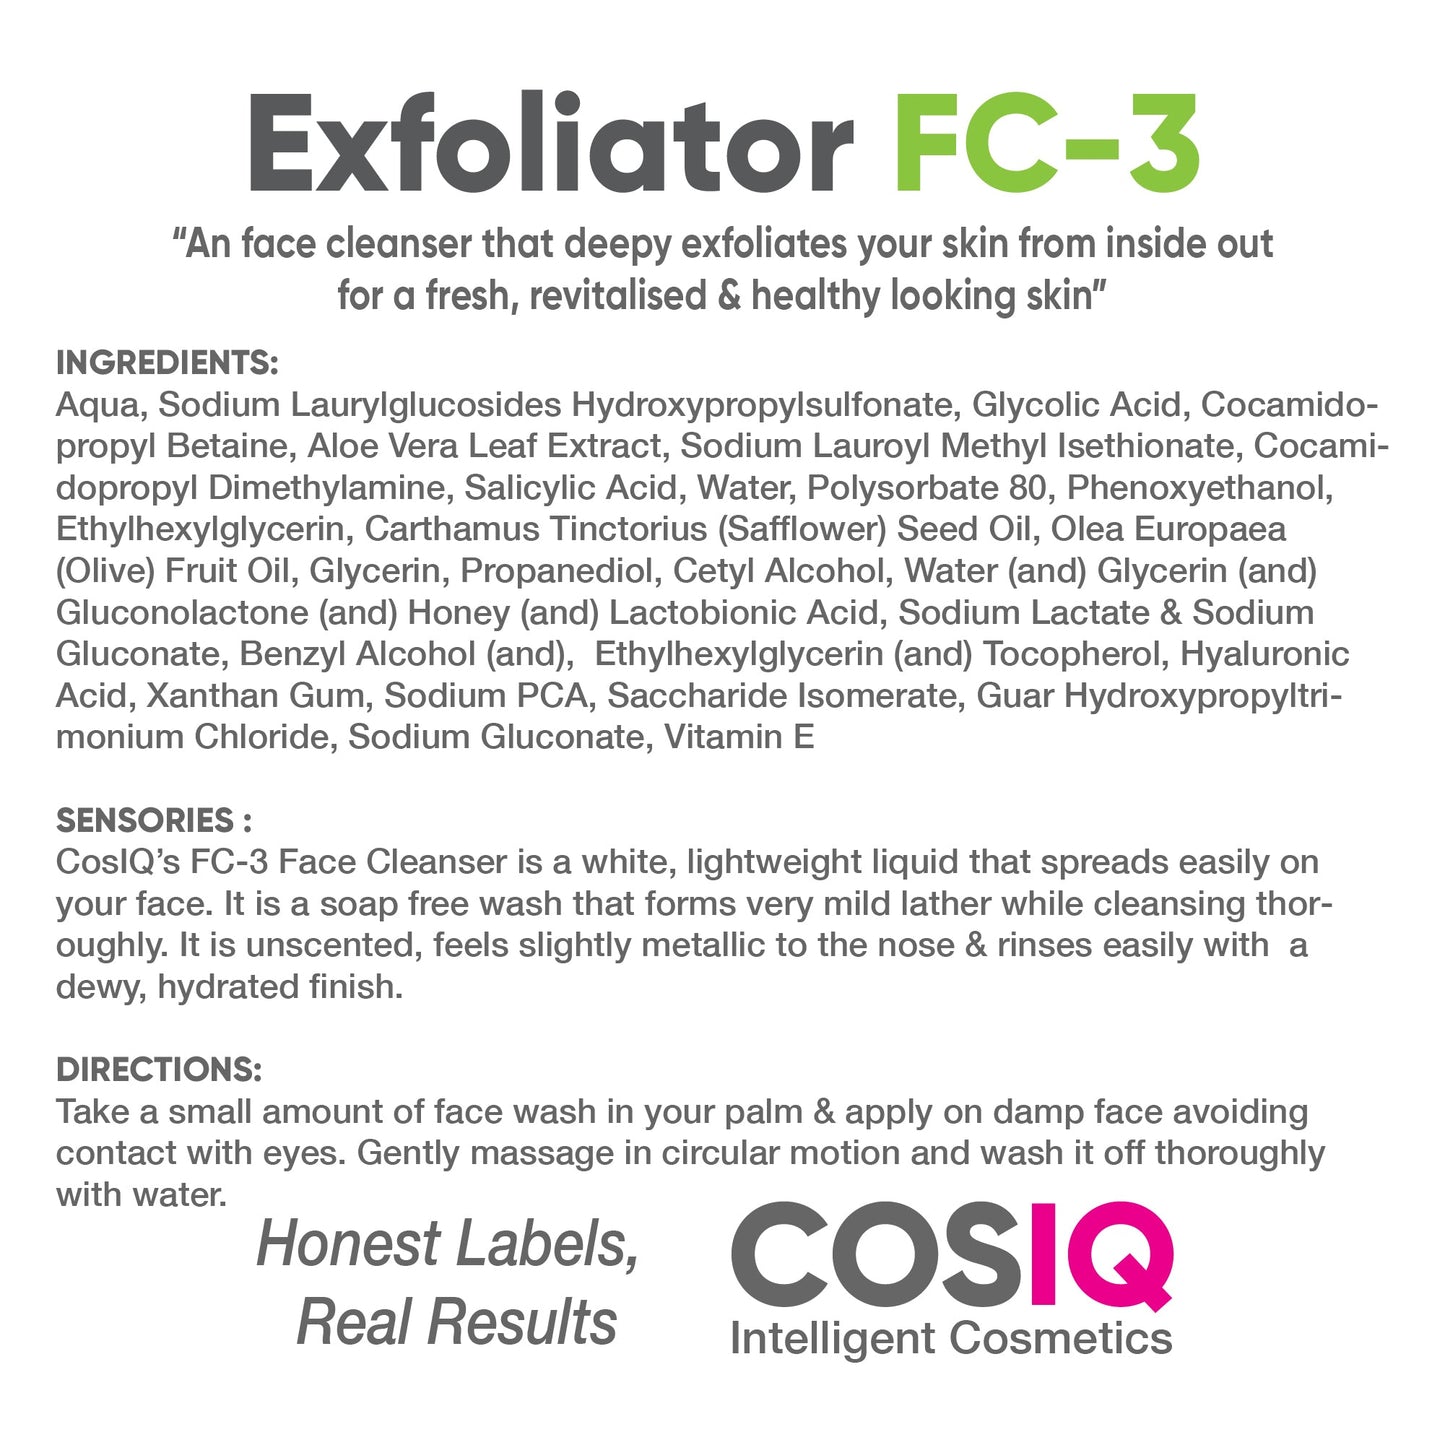 FC-3 Exfoliating Face Cleanser, 100ml